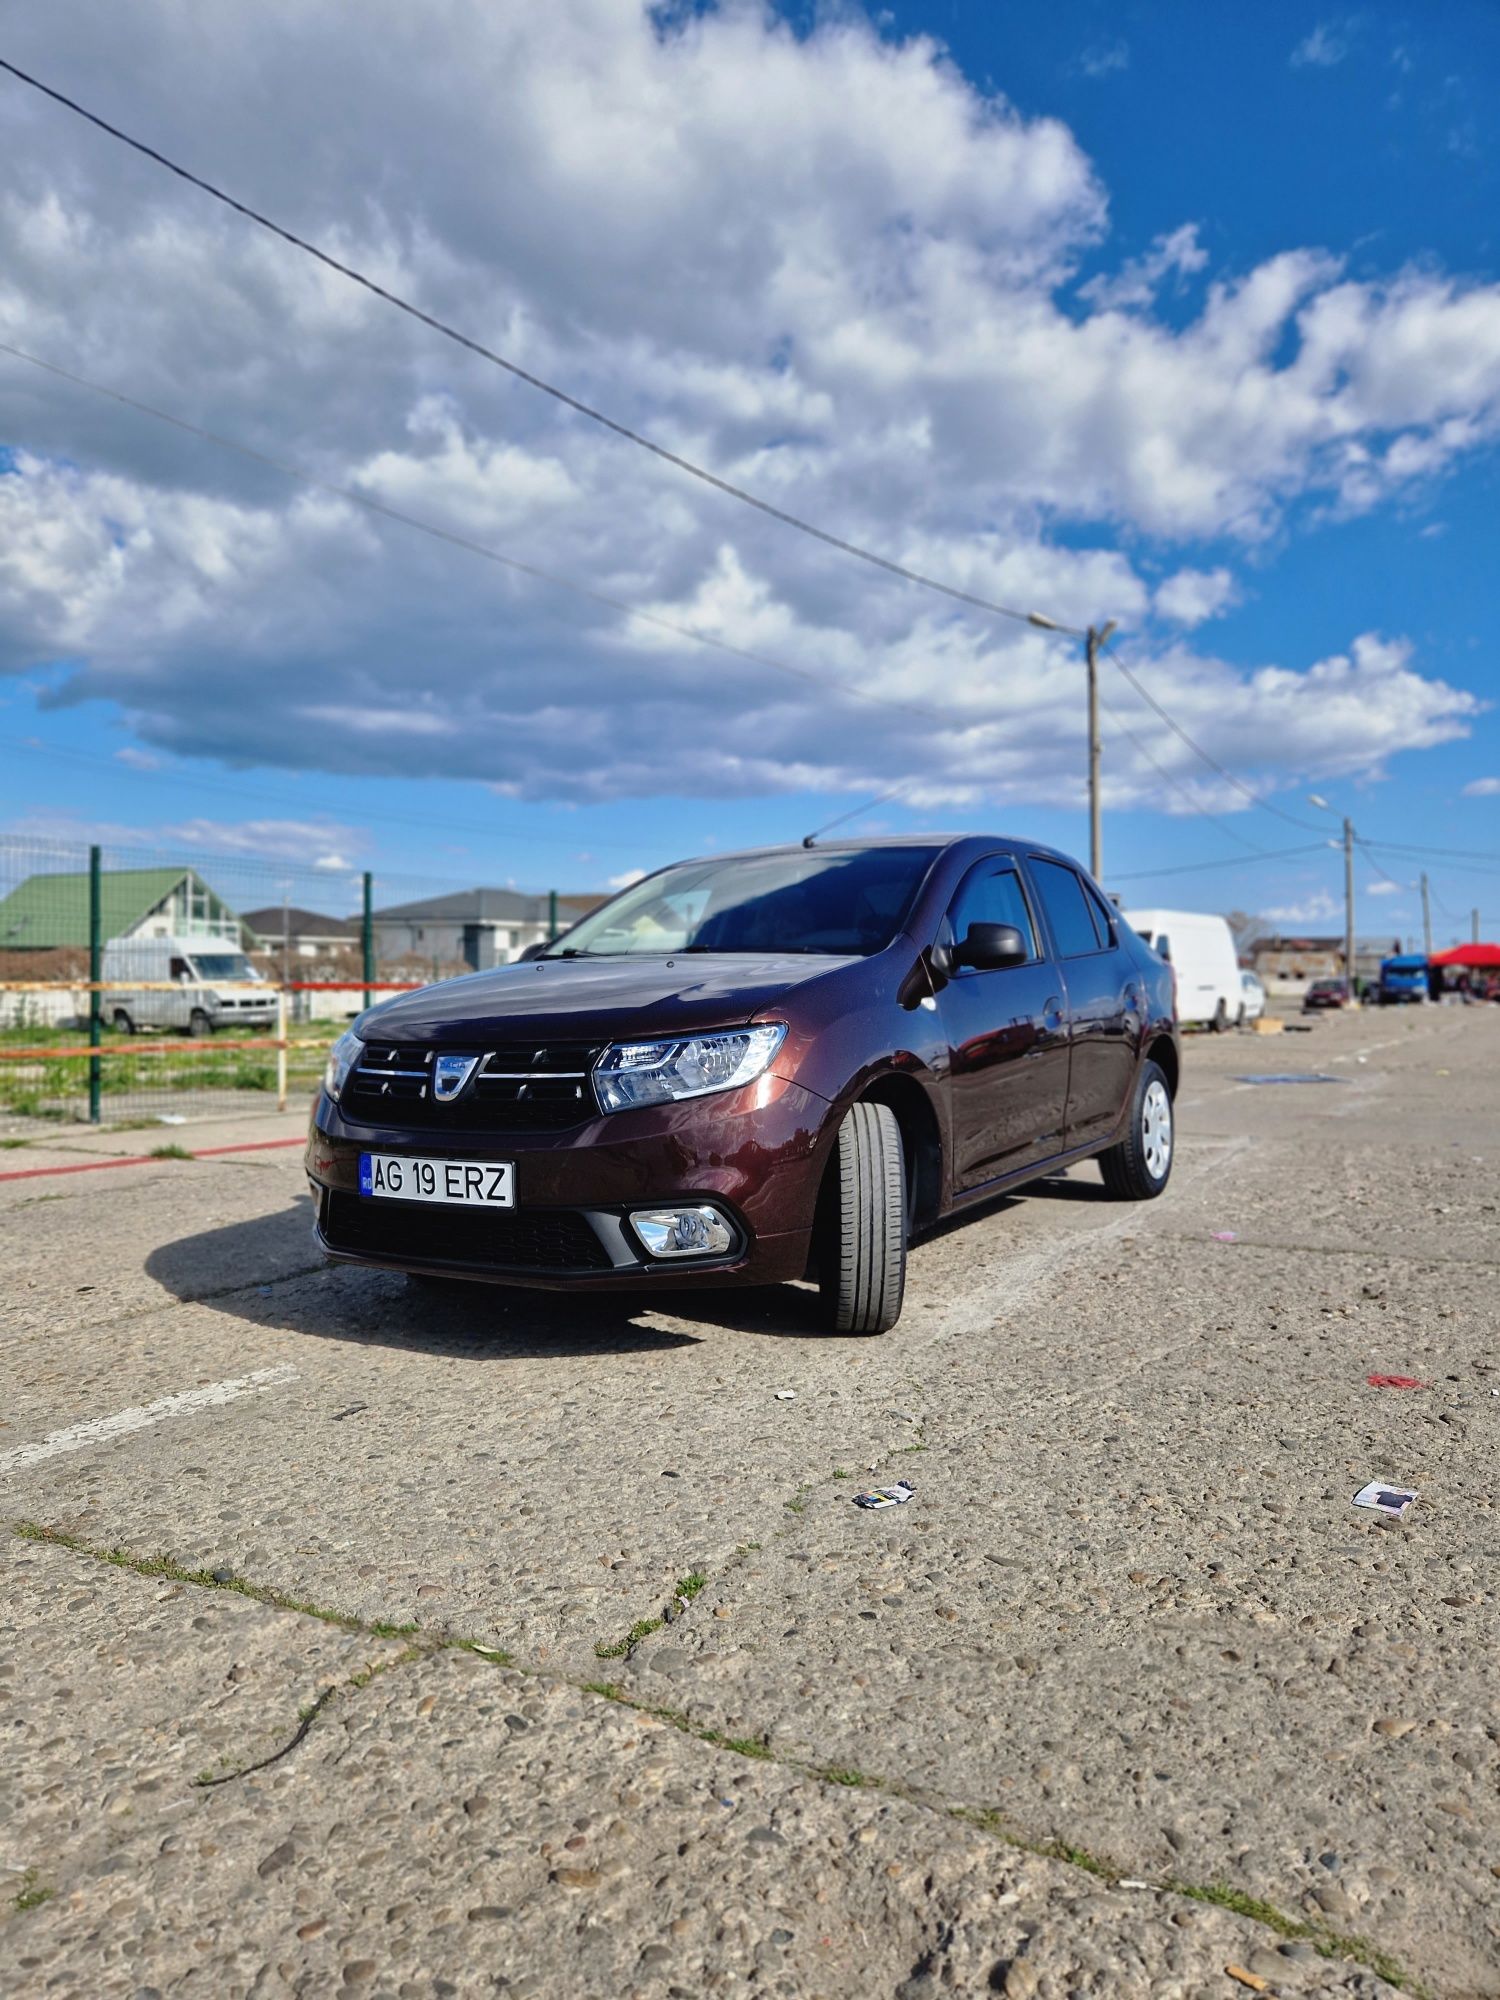 Vând Dacia Logan 2017 benzina/ gpl fabrica